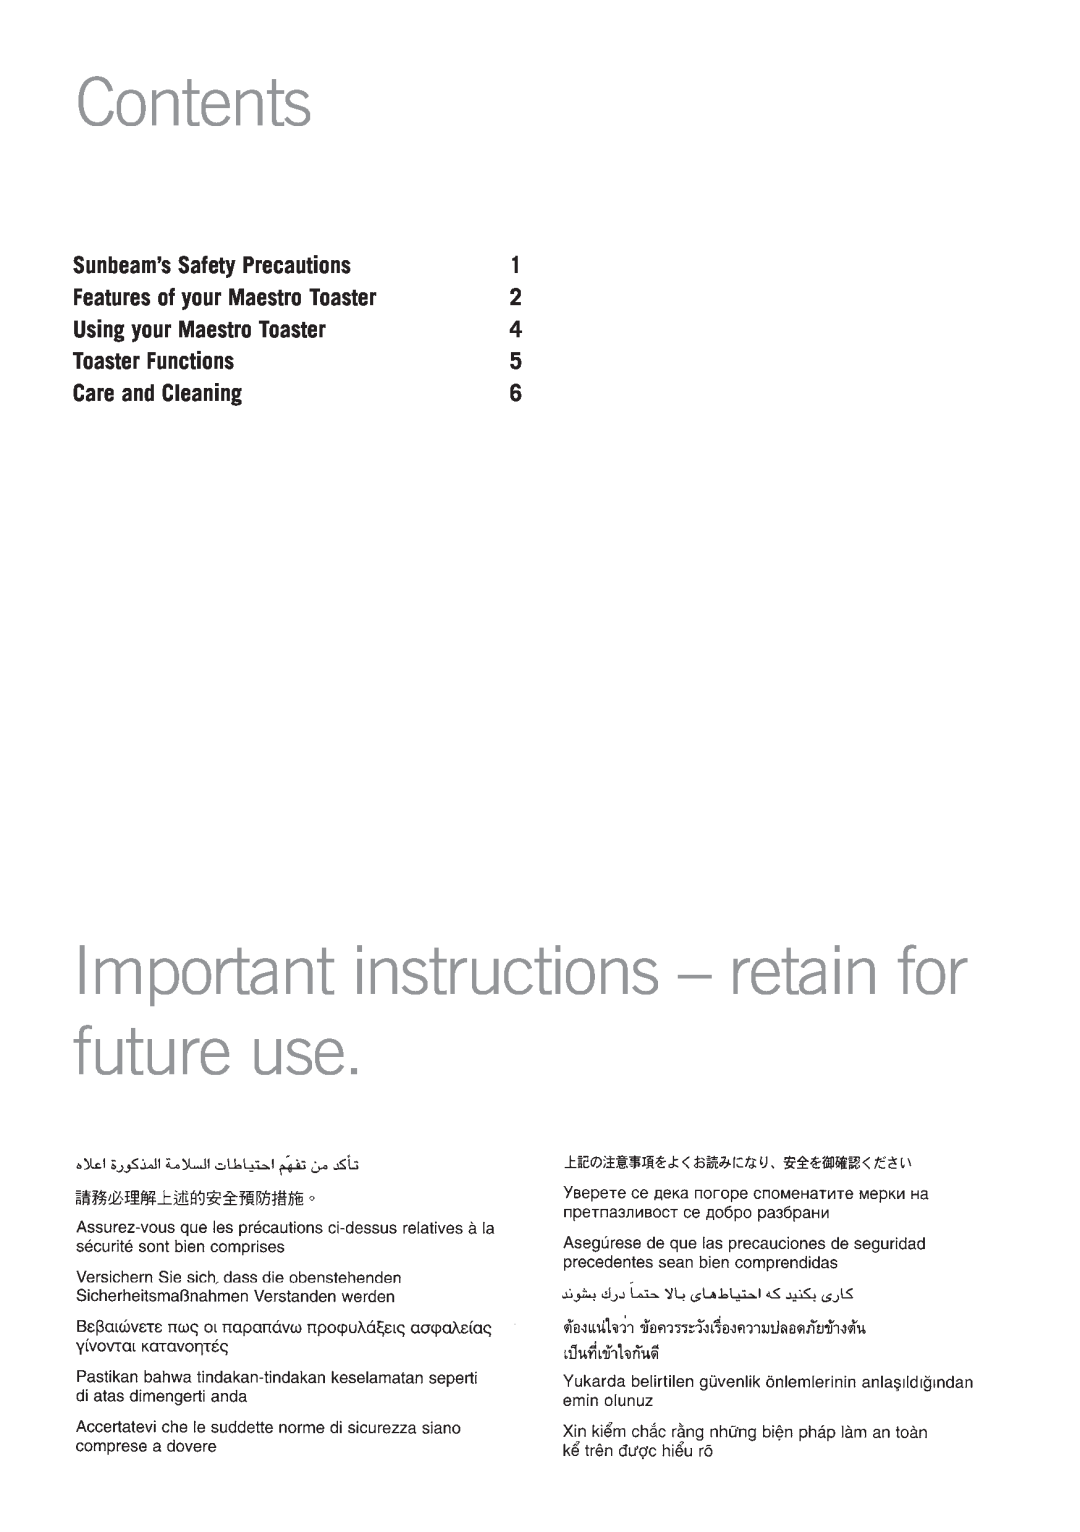 Sunbeam TA6440, TA6420 manual Contents, Important instructions - retain for future use 